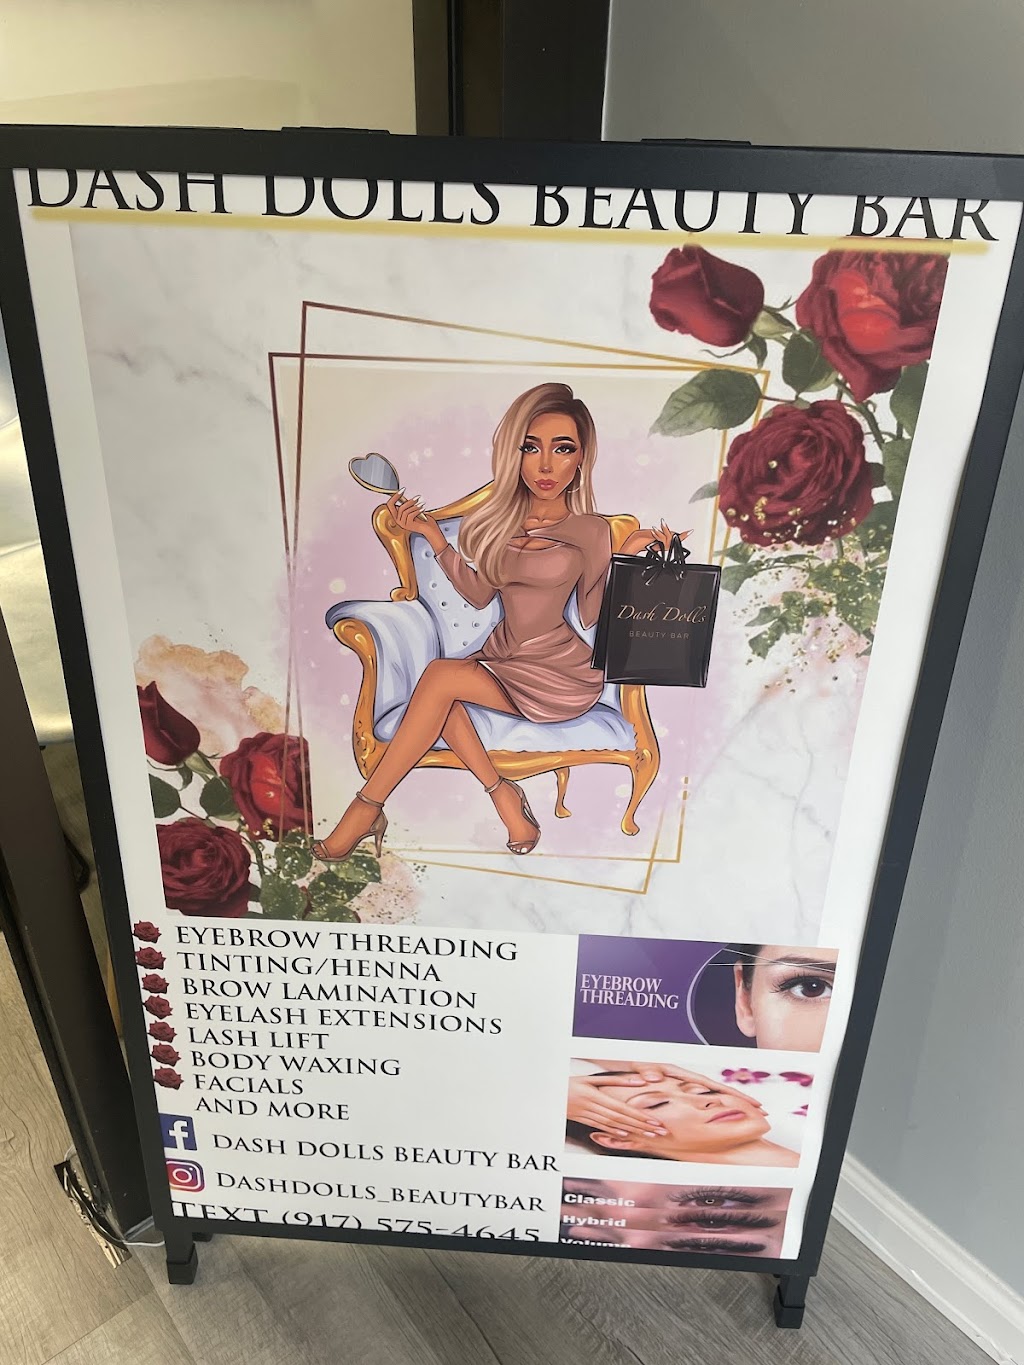 Dash Dolls Beauty Bar | 96a Baltimore St, Phillipsburg, NJ 08865 | Phone: (917) 575-4645